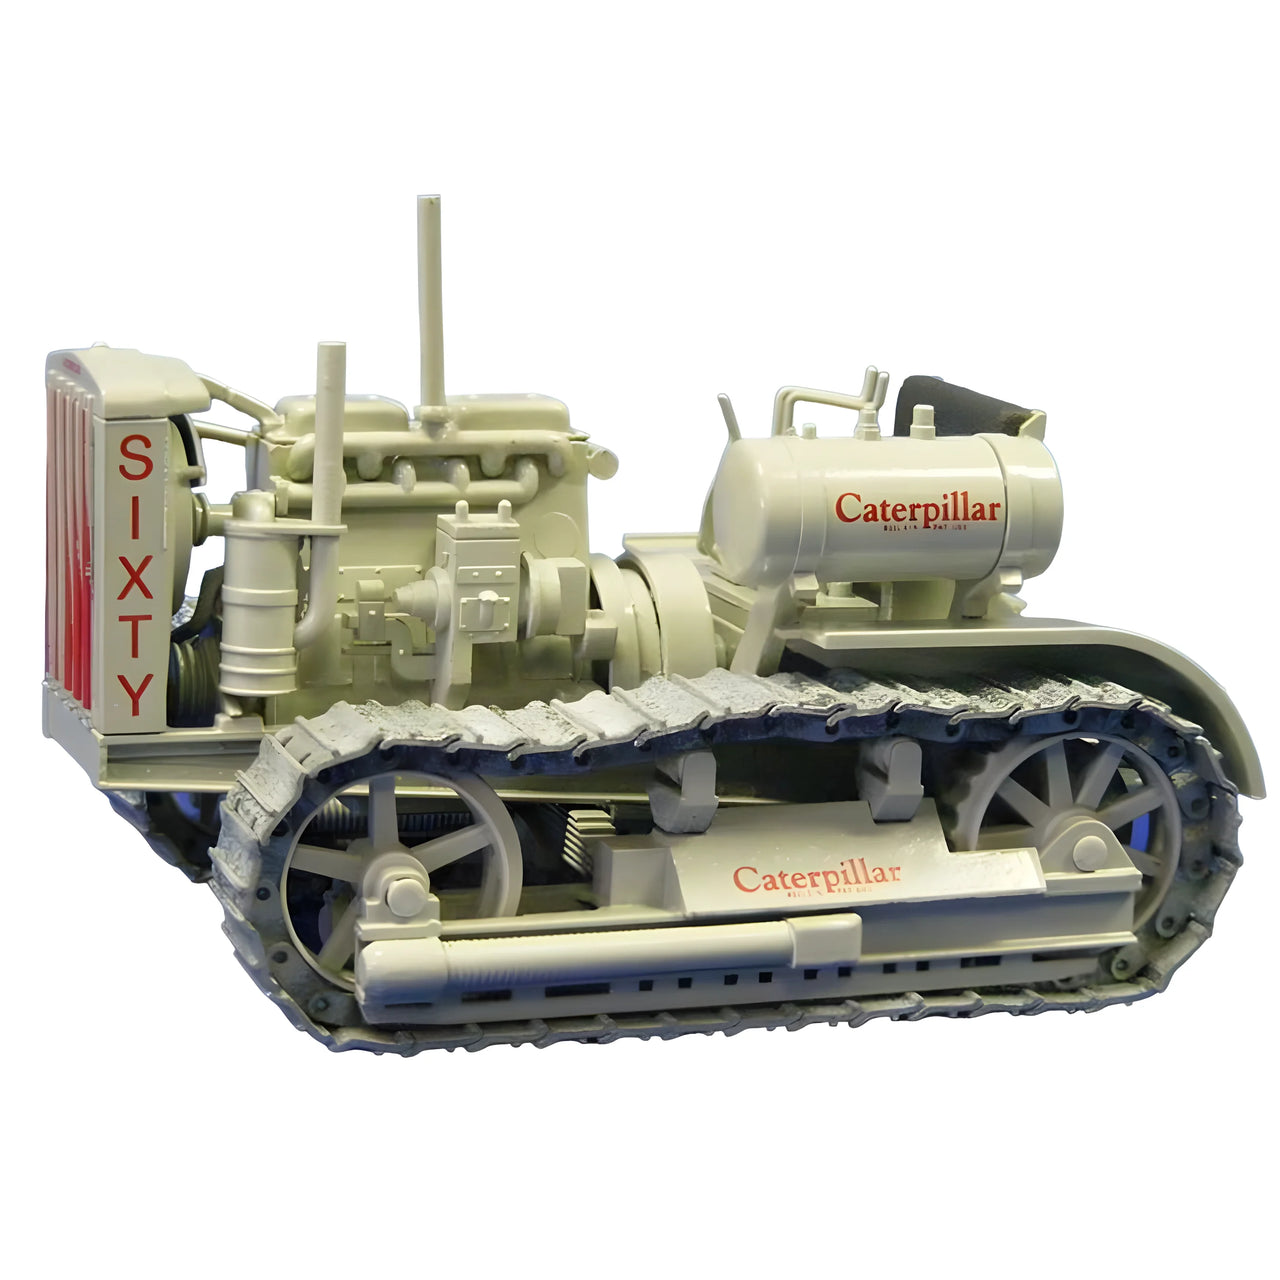 2873 Caterpillar Crawler Tractor 1931 Scale 1:25 (Discontinued Model)